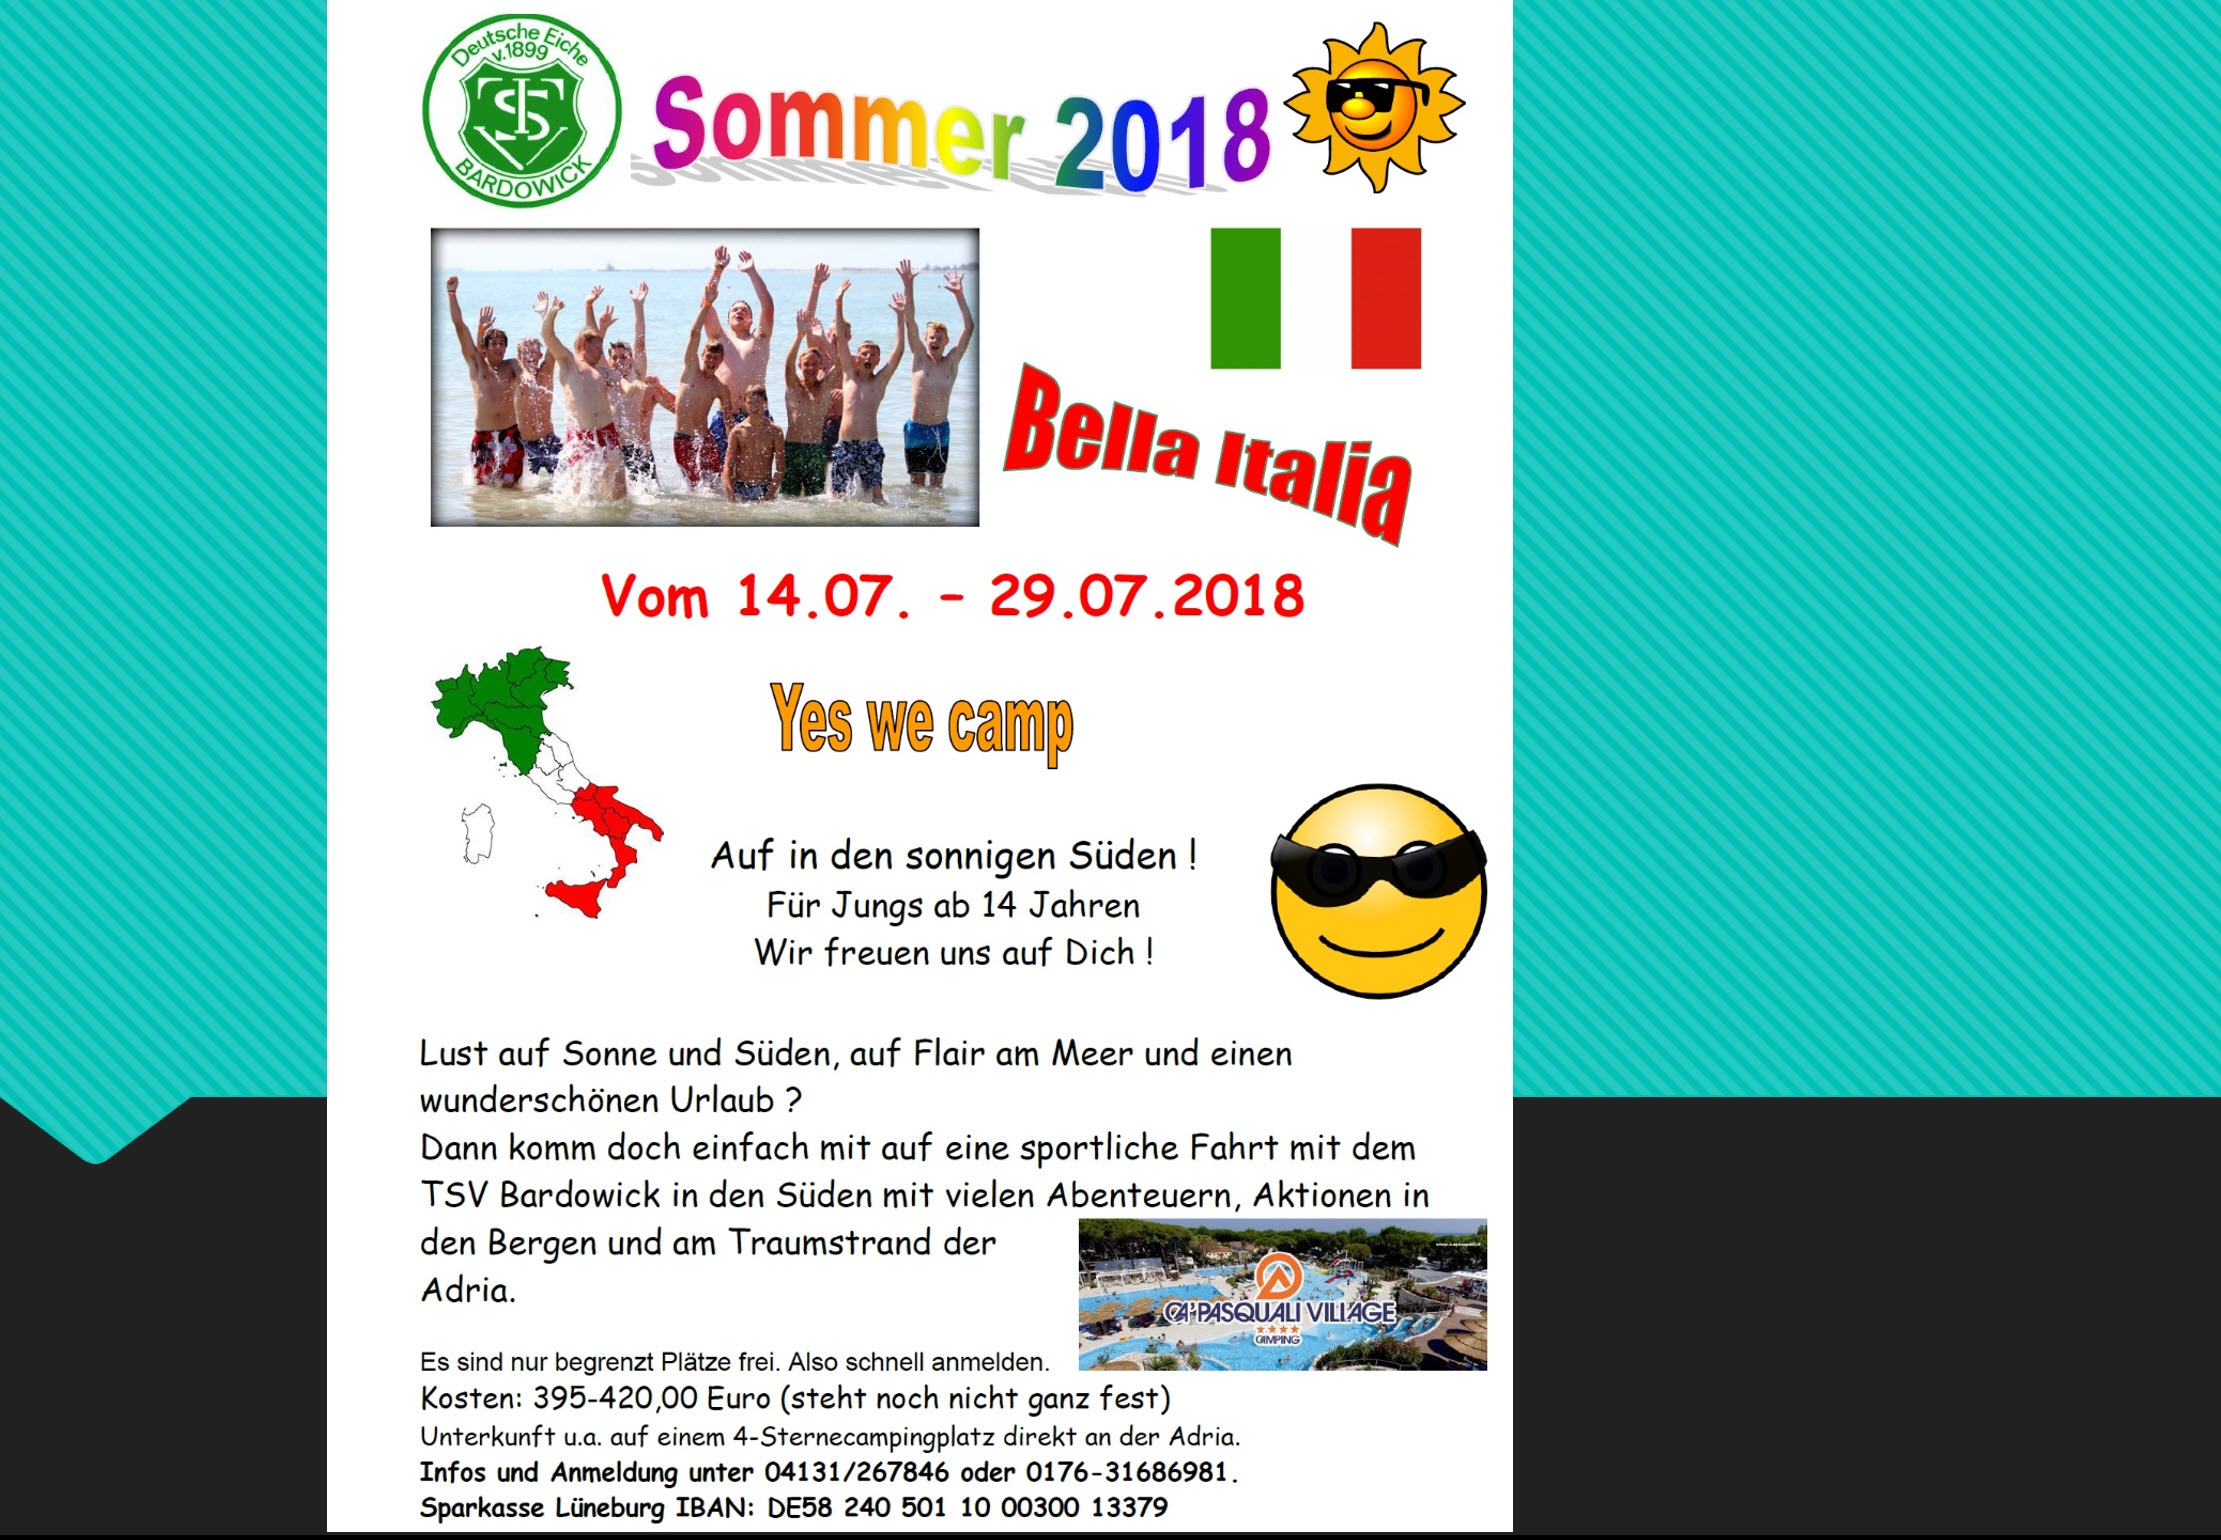 Sommer-Reise nach Italien - Interesse?